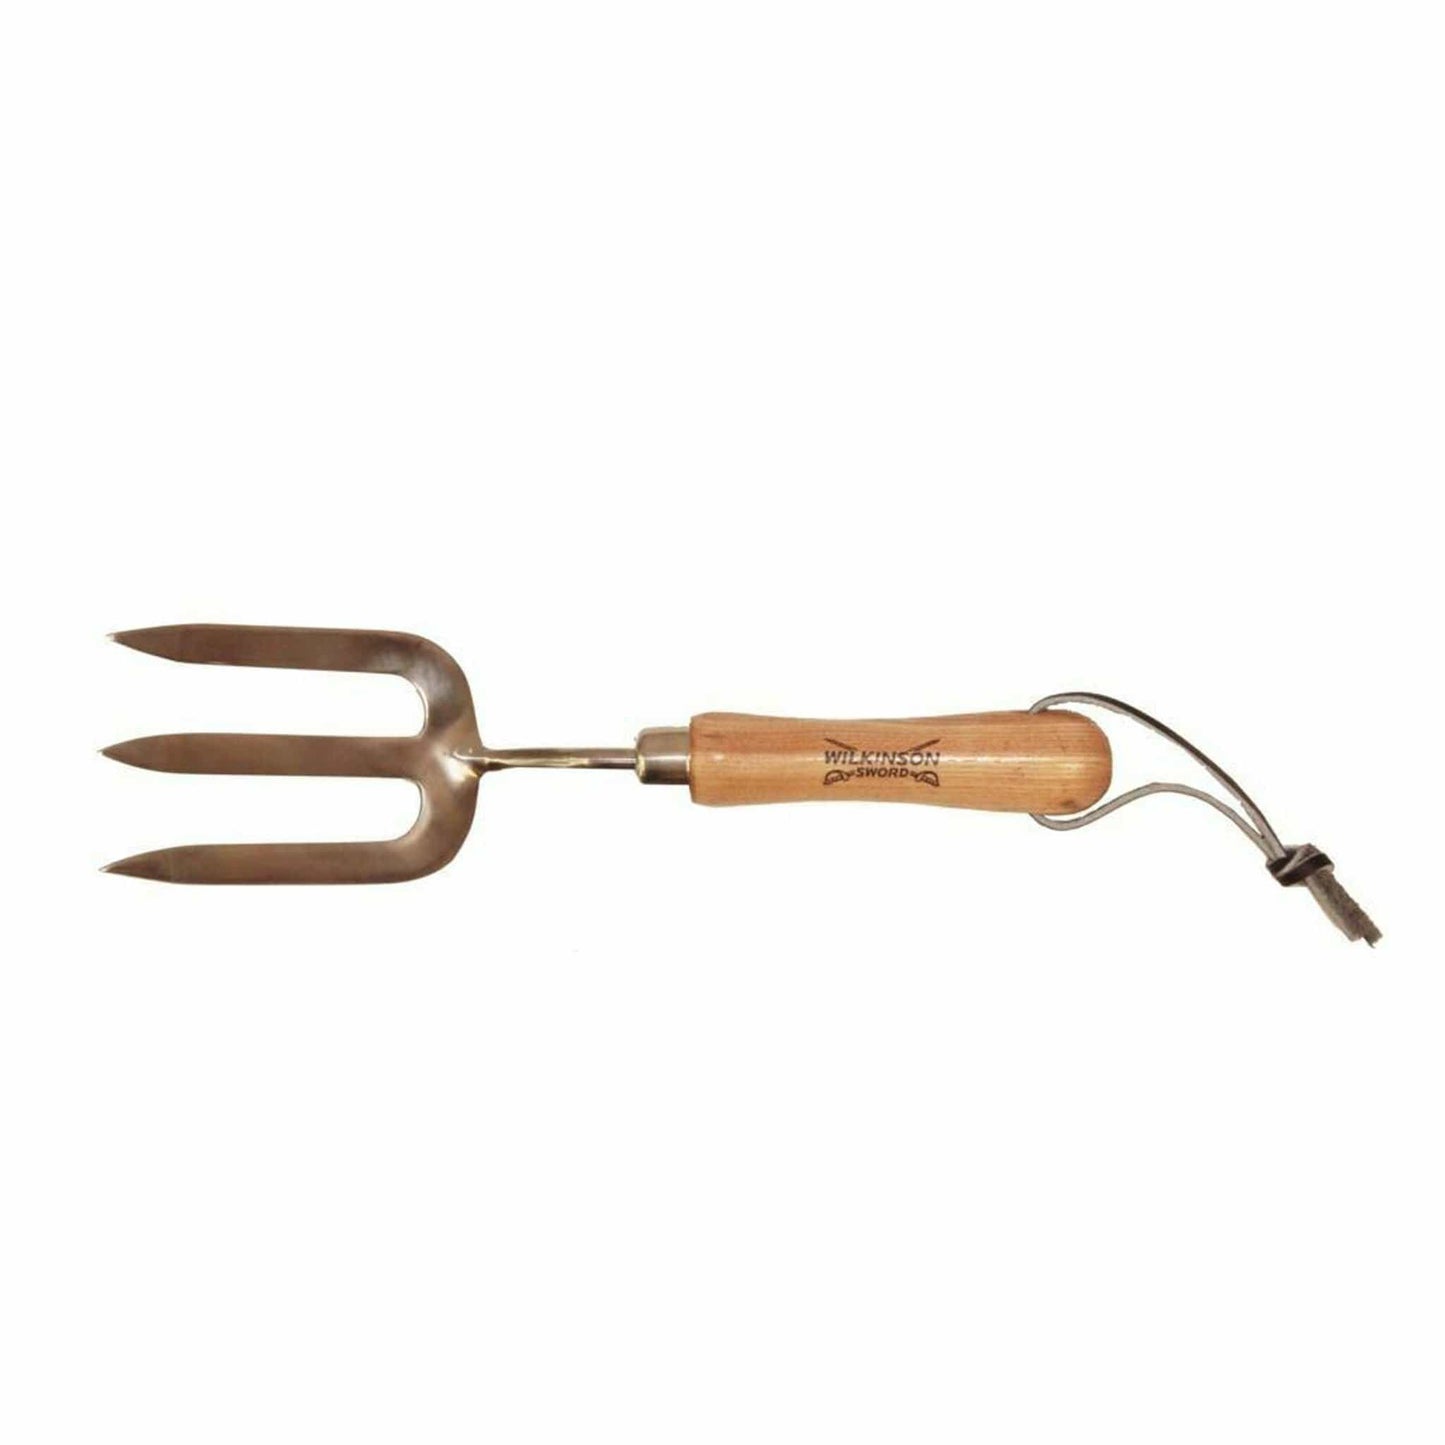 Gardening  -  Wilkinson Sword Stainless Garden Hand Fork  -  50155549